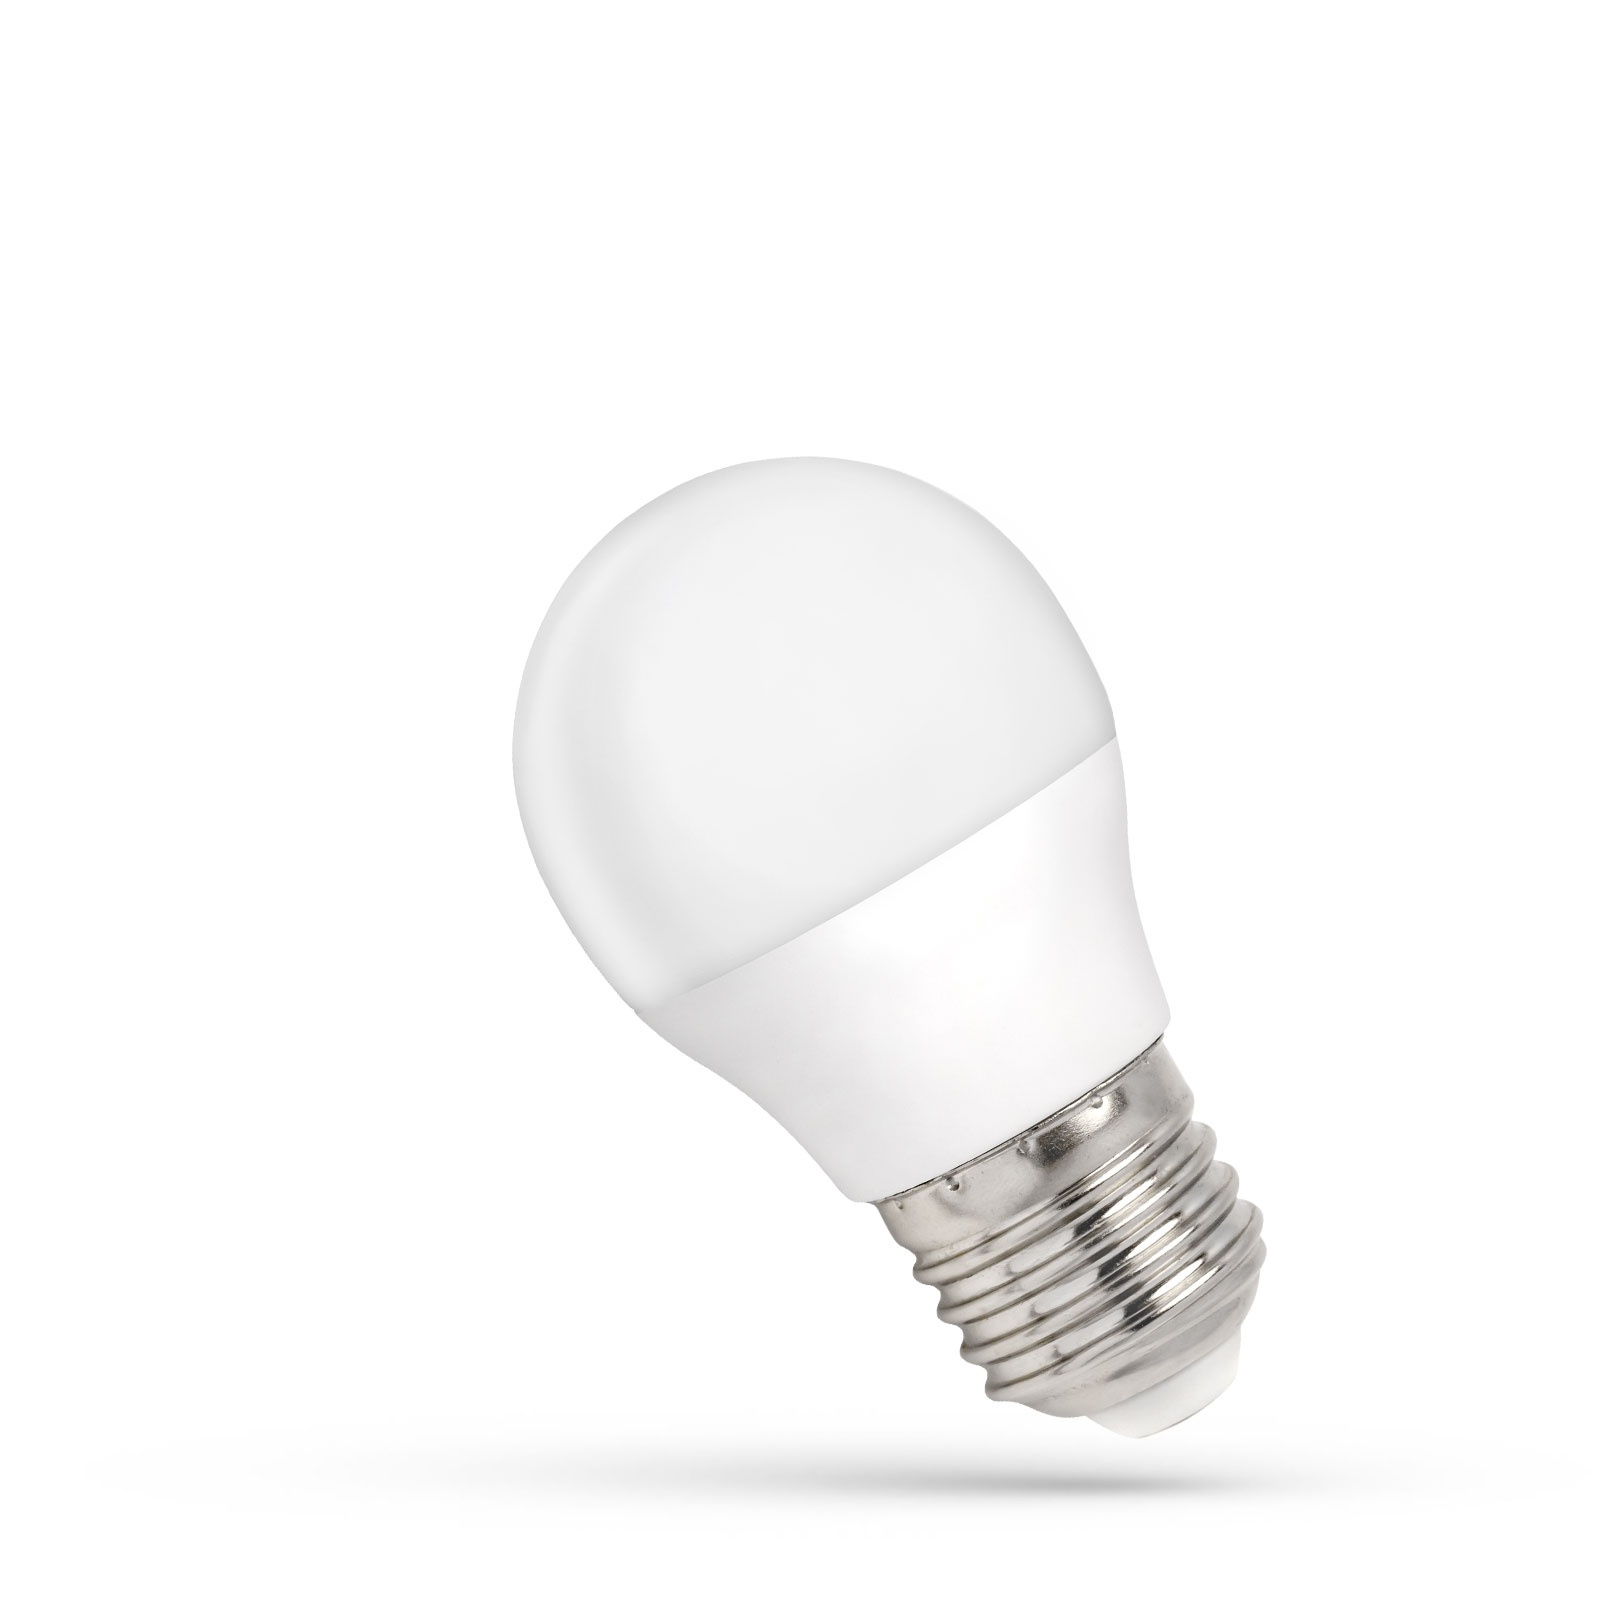 Reciteren Drama broeden LED Lamp E27 fitting - G45 - 4000K helder wit licht - 4W vervangt 31W -  Ledpanelendiscounter.nl